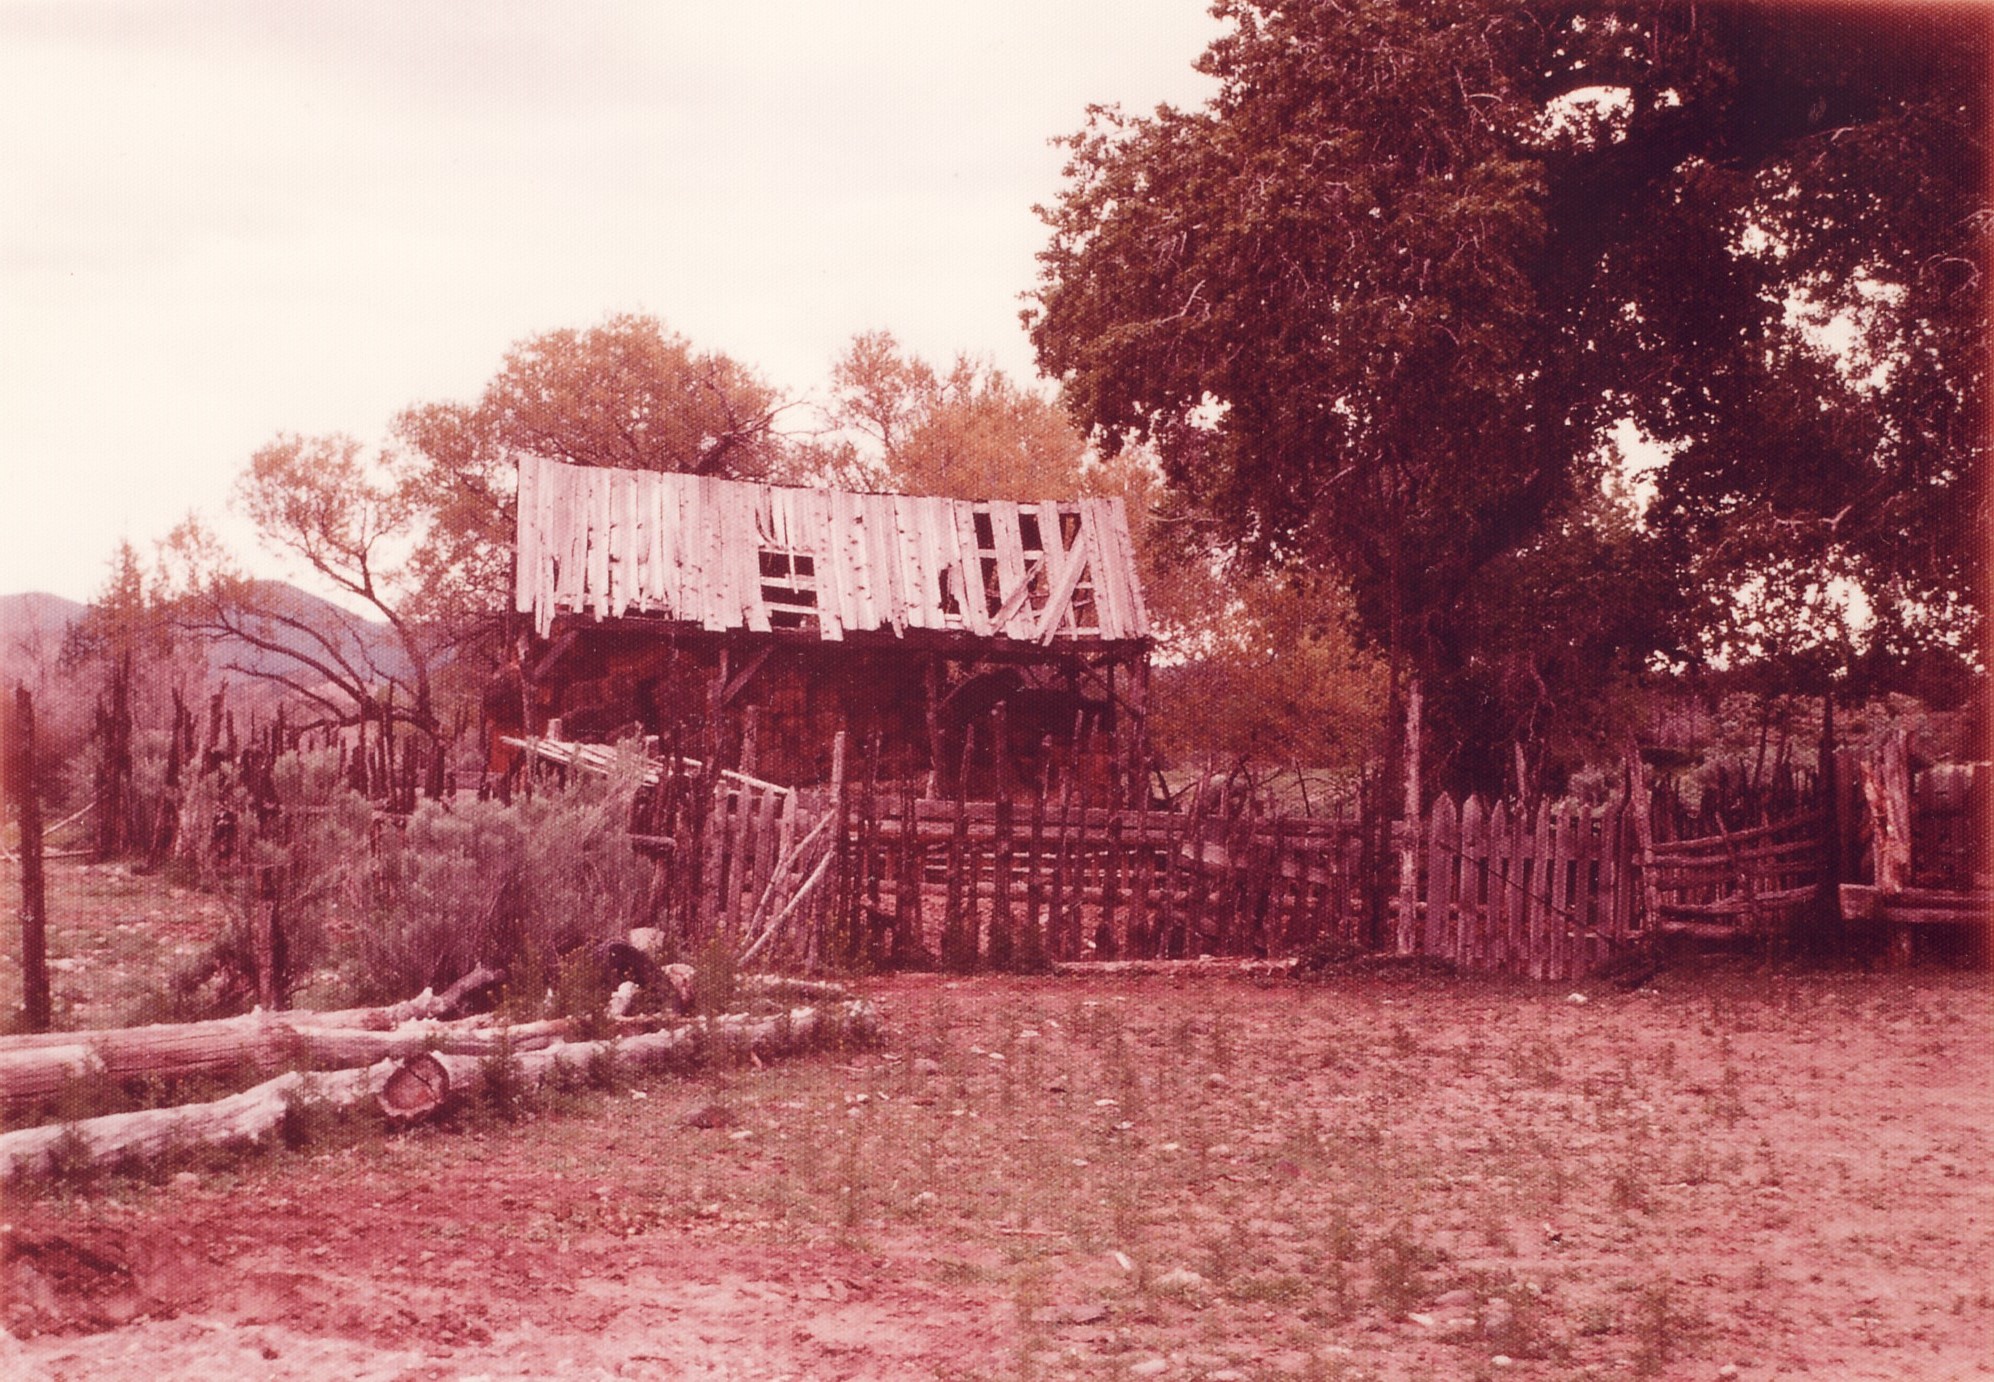 One of the original barns at the Biglow Ranch in Veyo, Utah